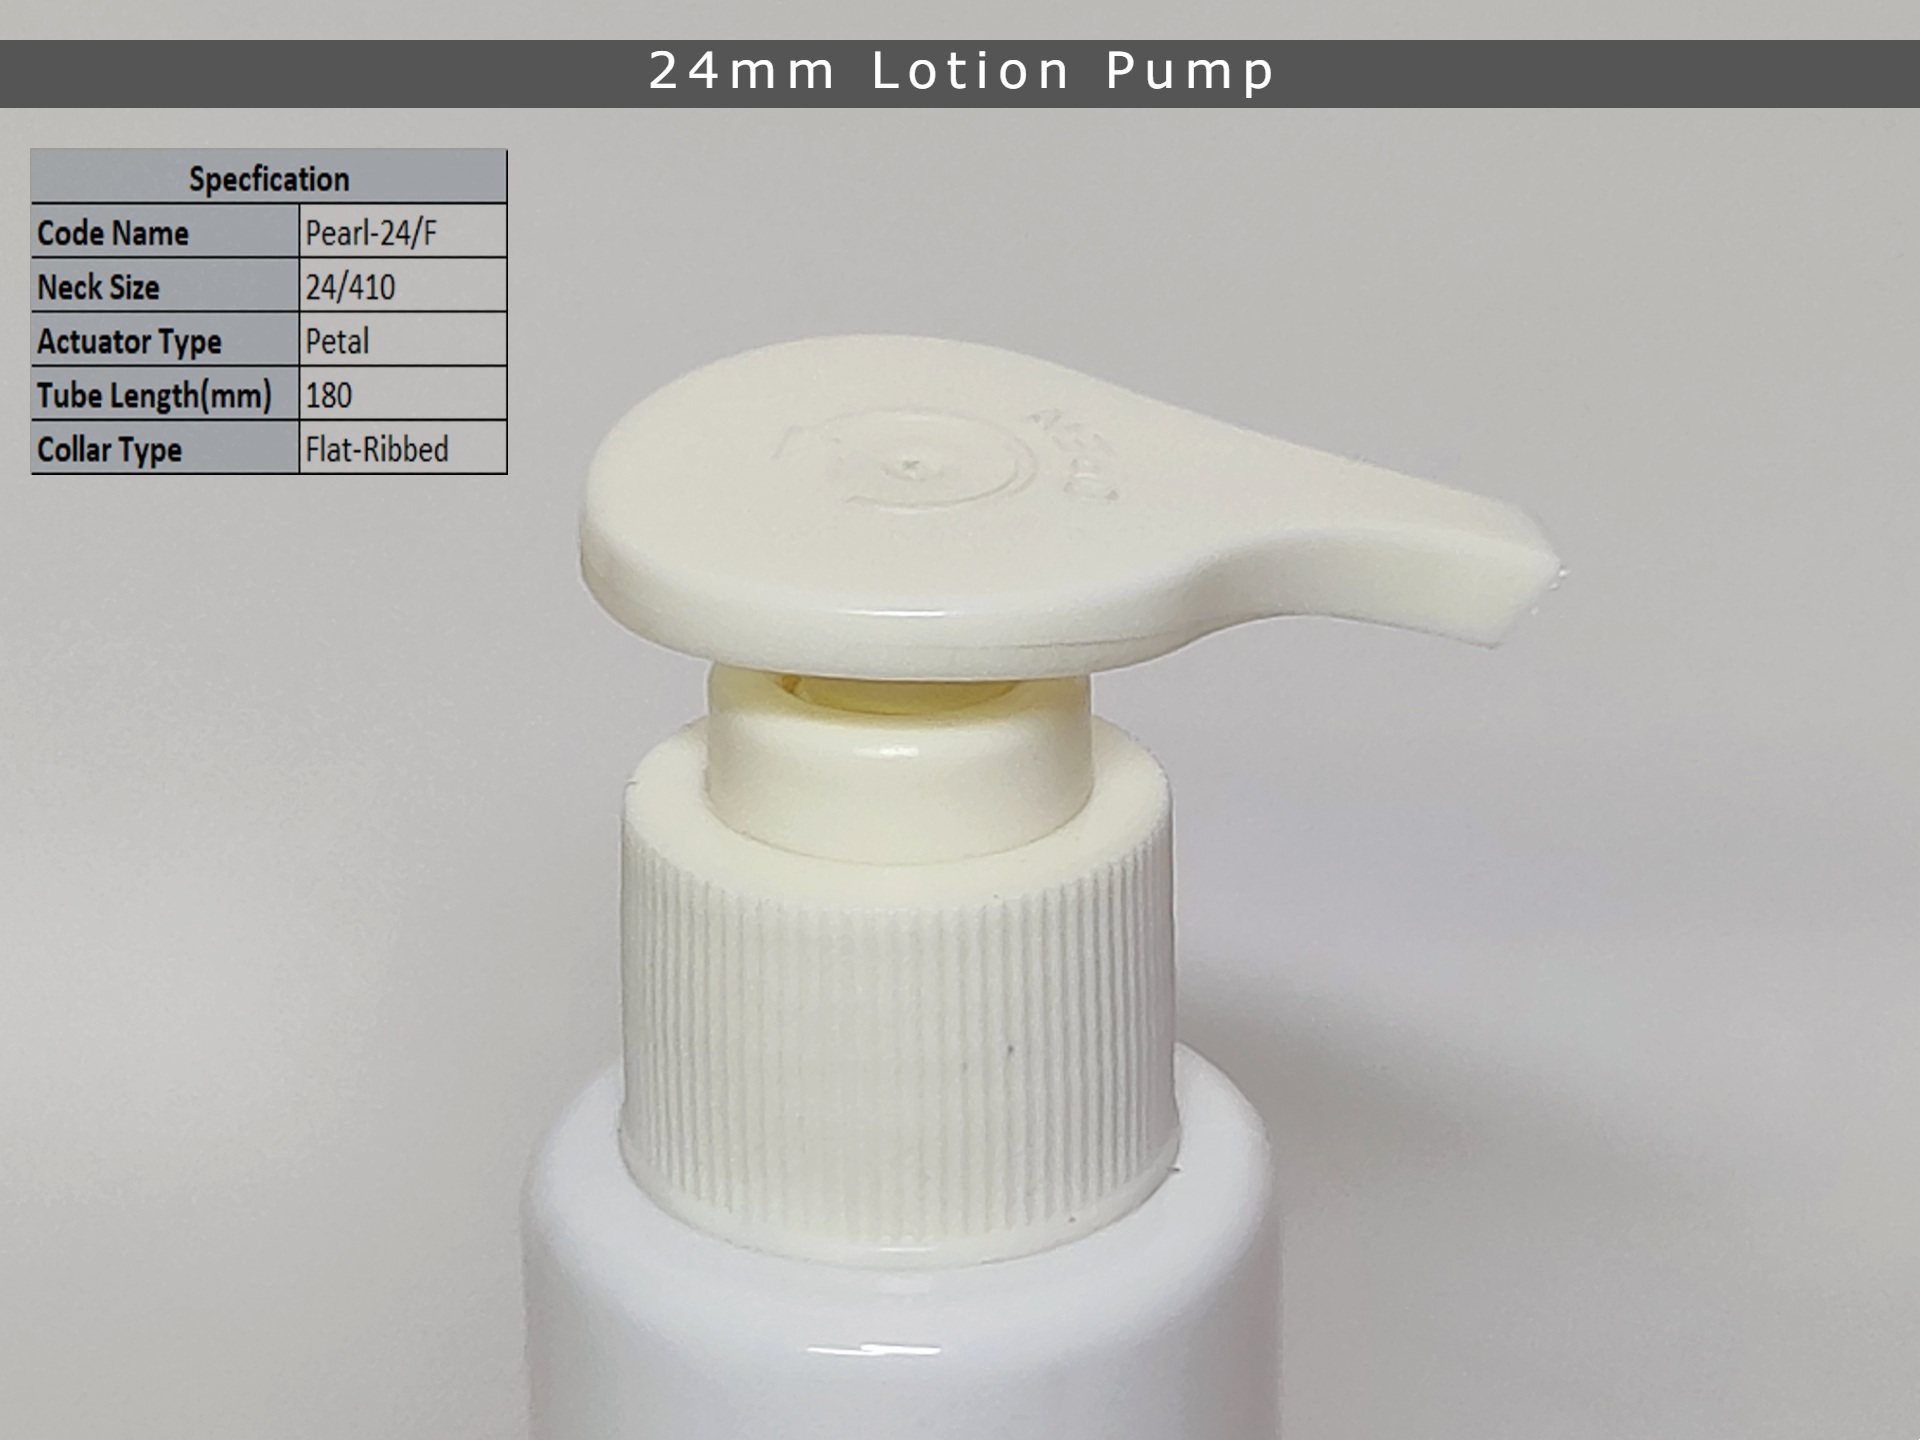 24mm Lotion Pump